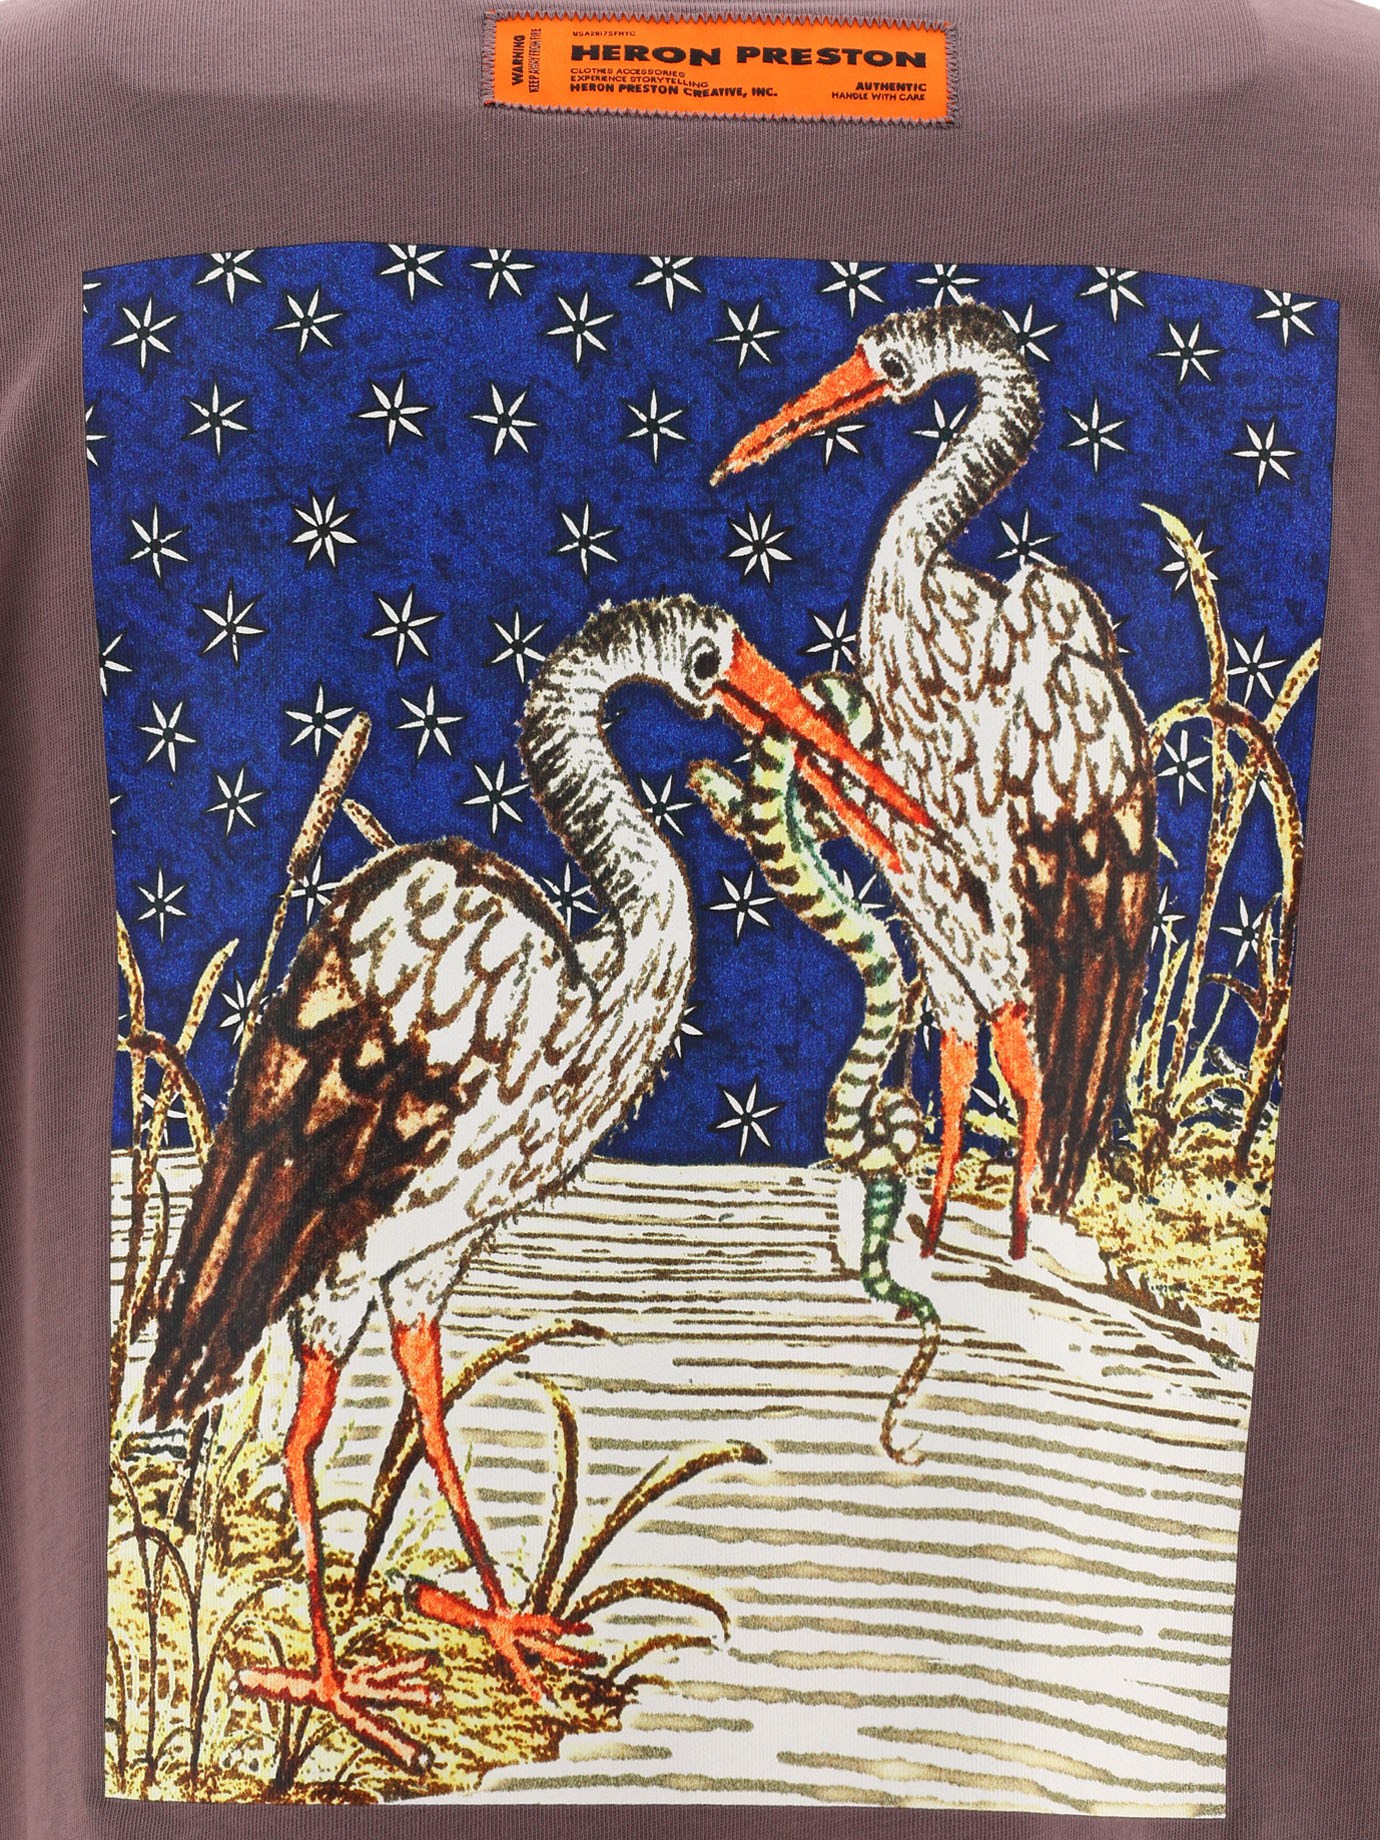 T-shirt  Medieval Heron  by Heron Preston